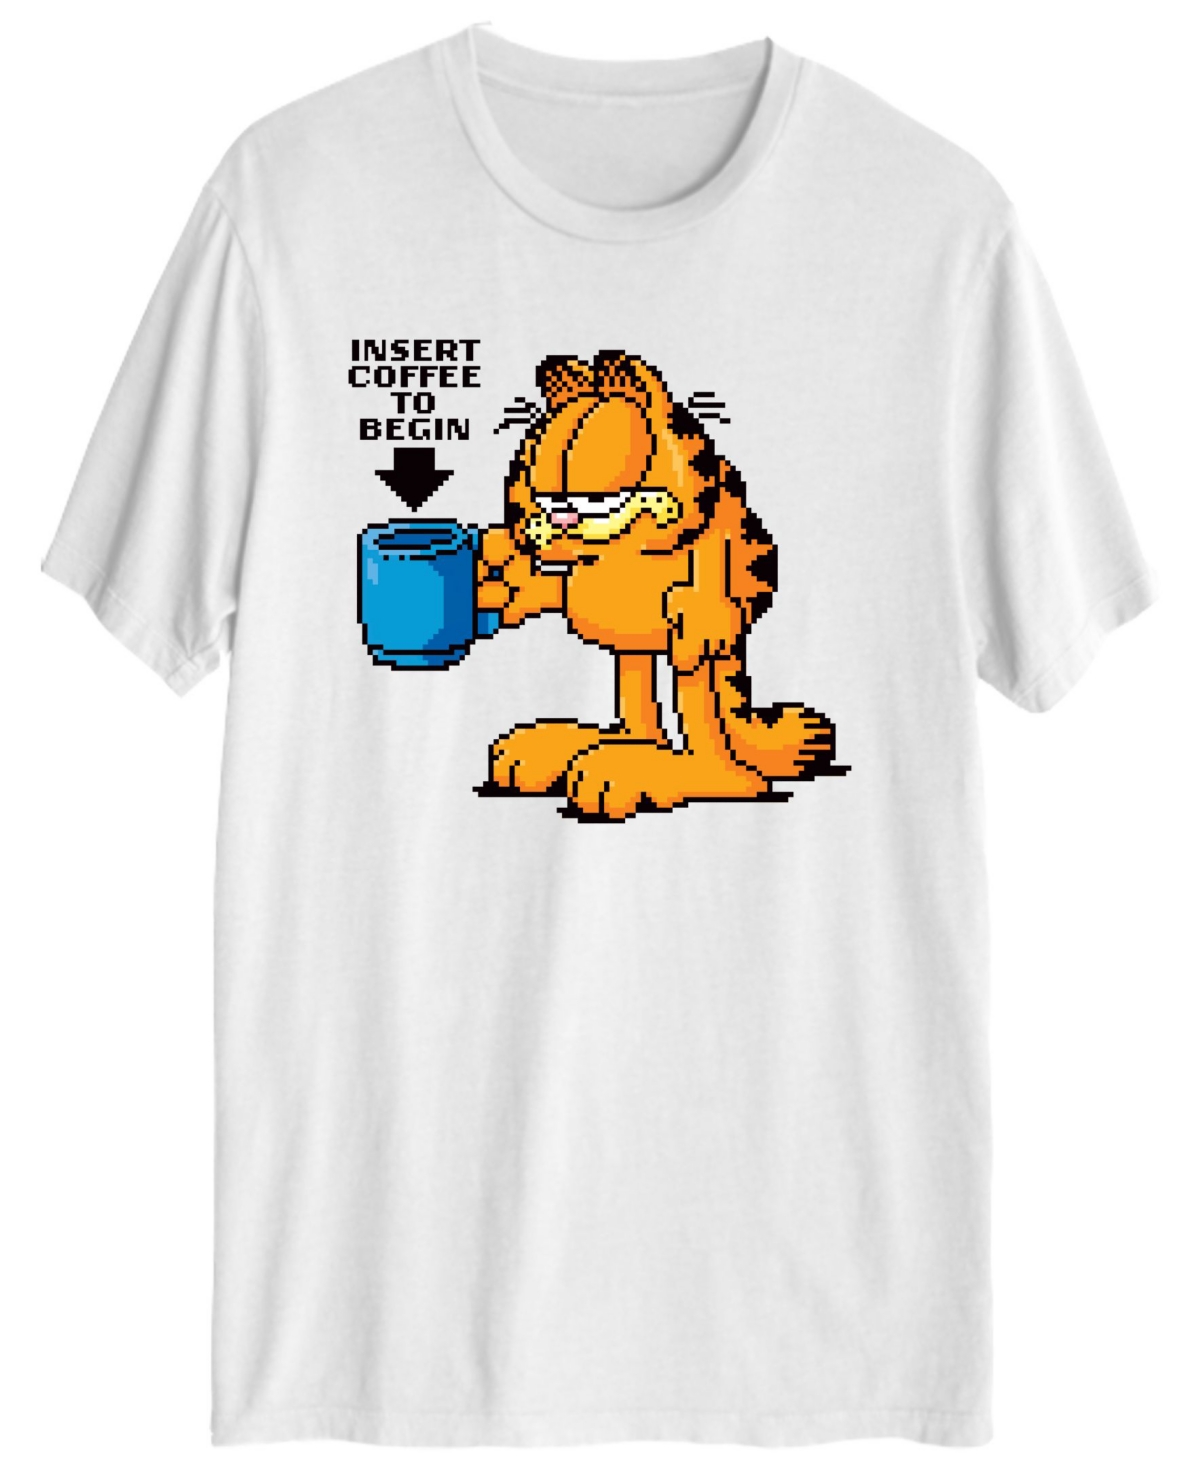 Hybrid Apparel Men's Insert Coffee Graphic T-shirt